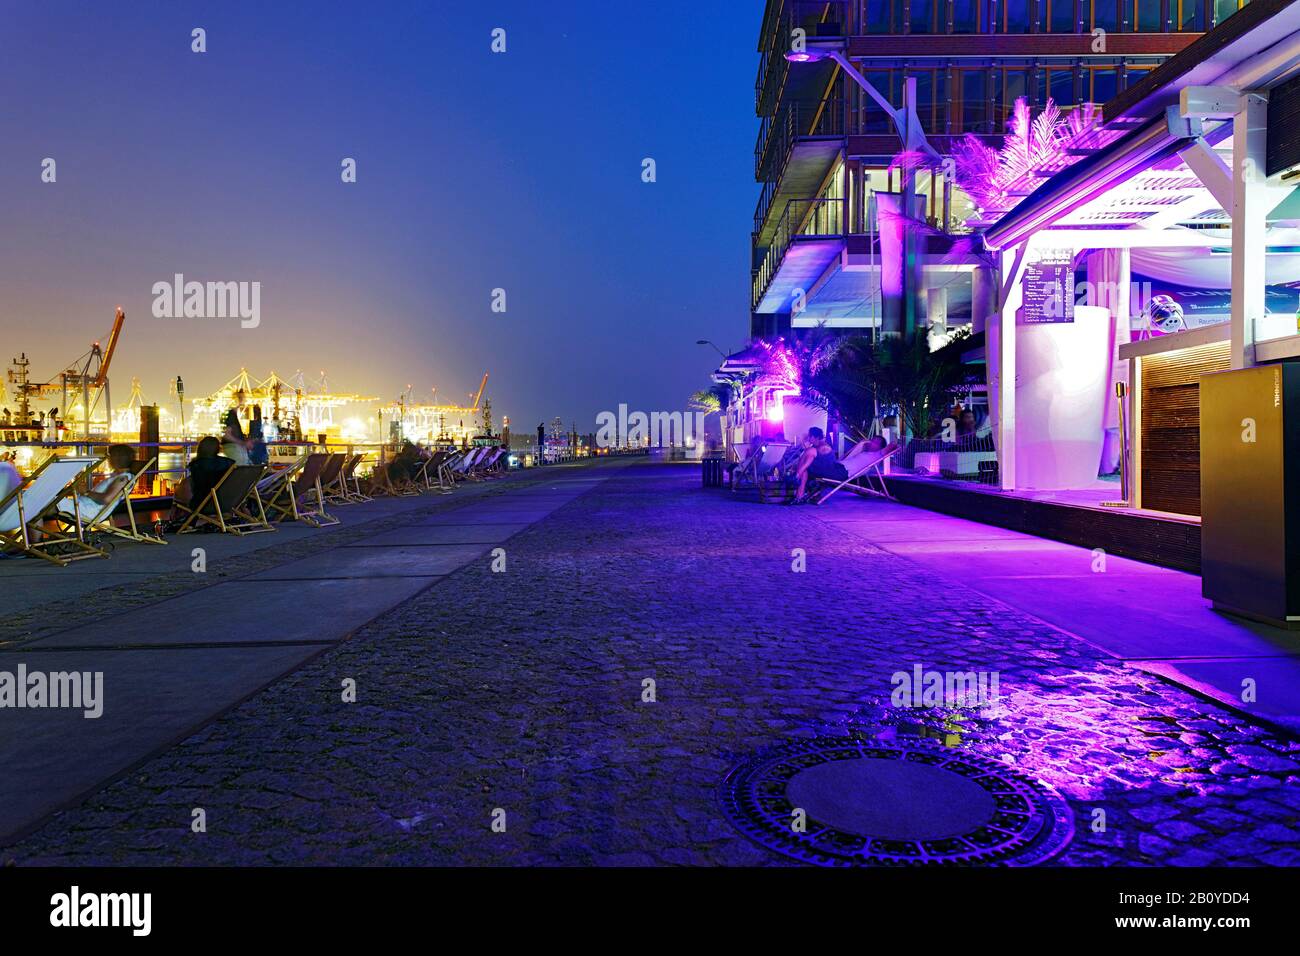 Piano Beach Club, club de estilo de vida, arquitectura moderna, distrito de Neumühlen, Hanseatic City Alemania, Europa, Foto de stock